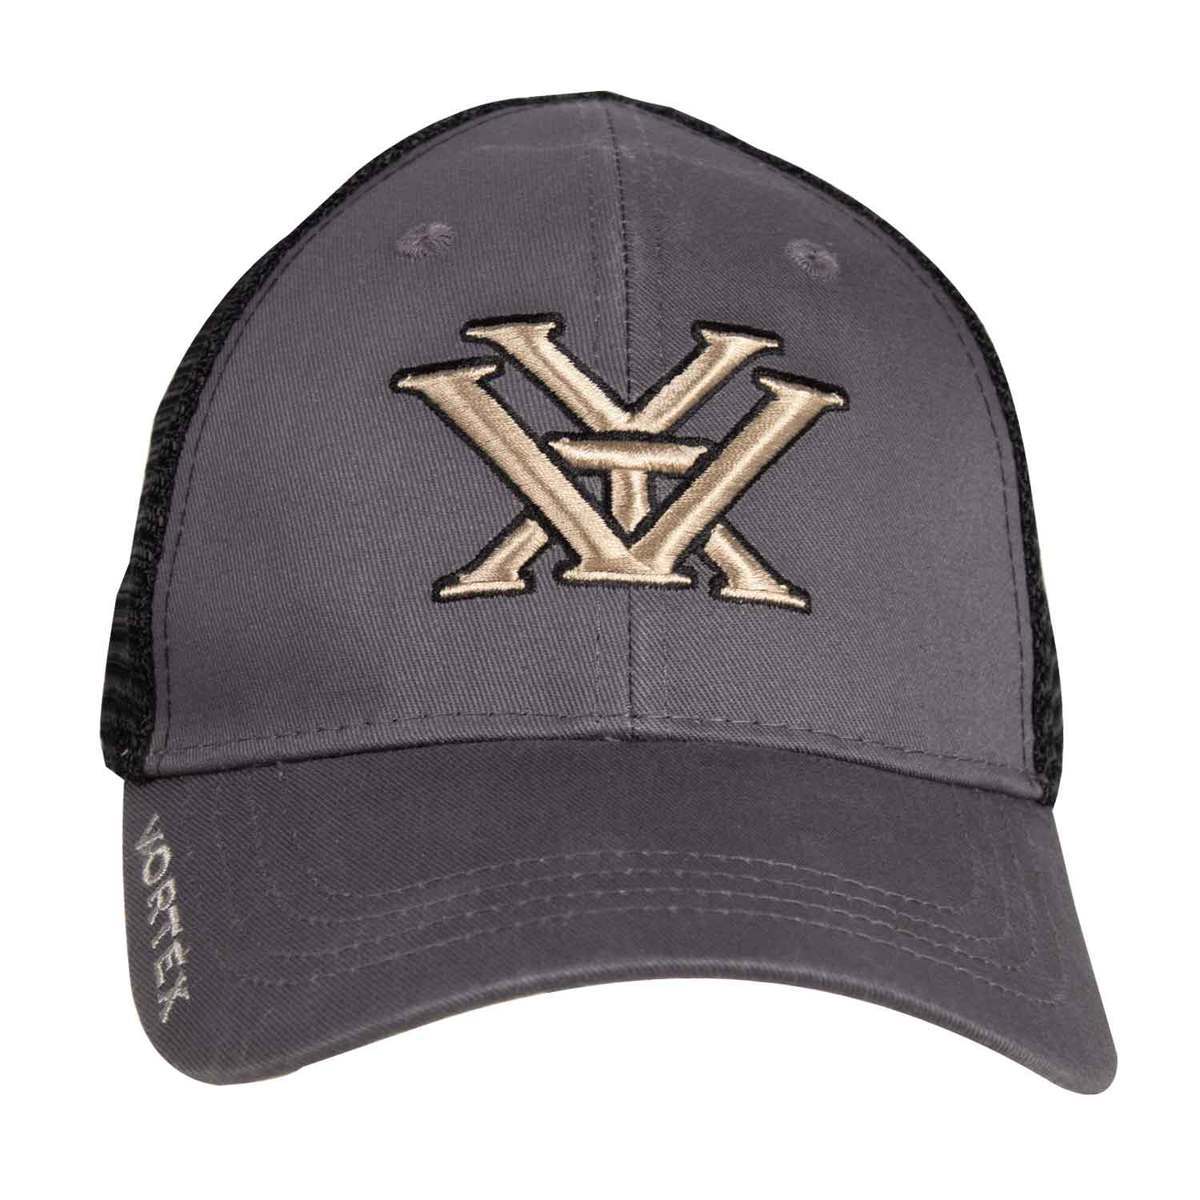 Vortex Men's Logo Hat - Charcoal - Charcoal One Size Fits Most ...